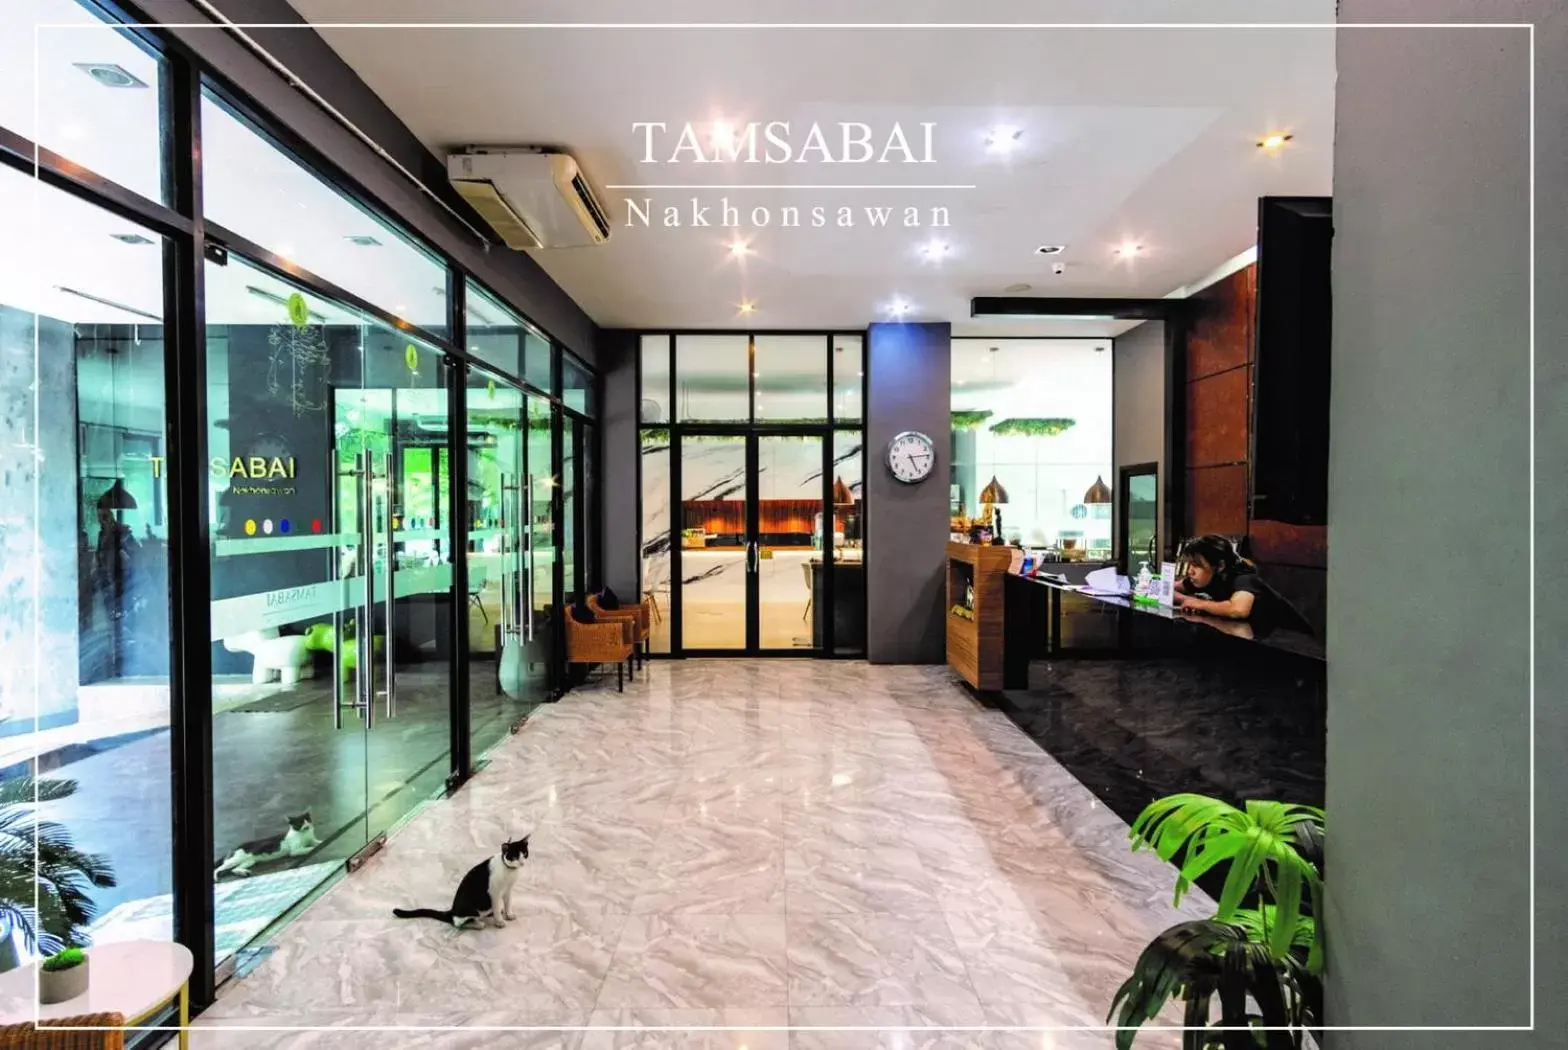 Lobby or reception in Tamsabai hotel